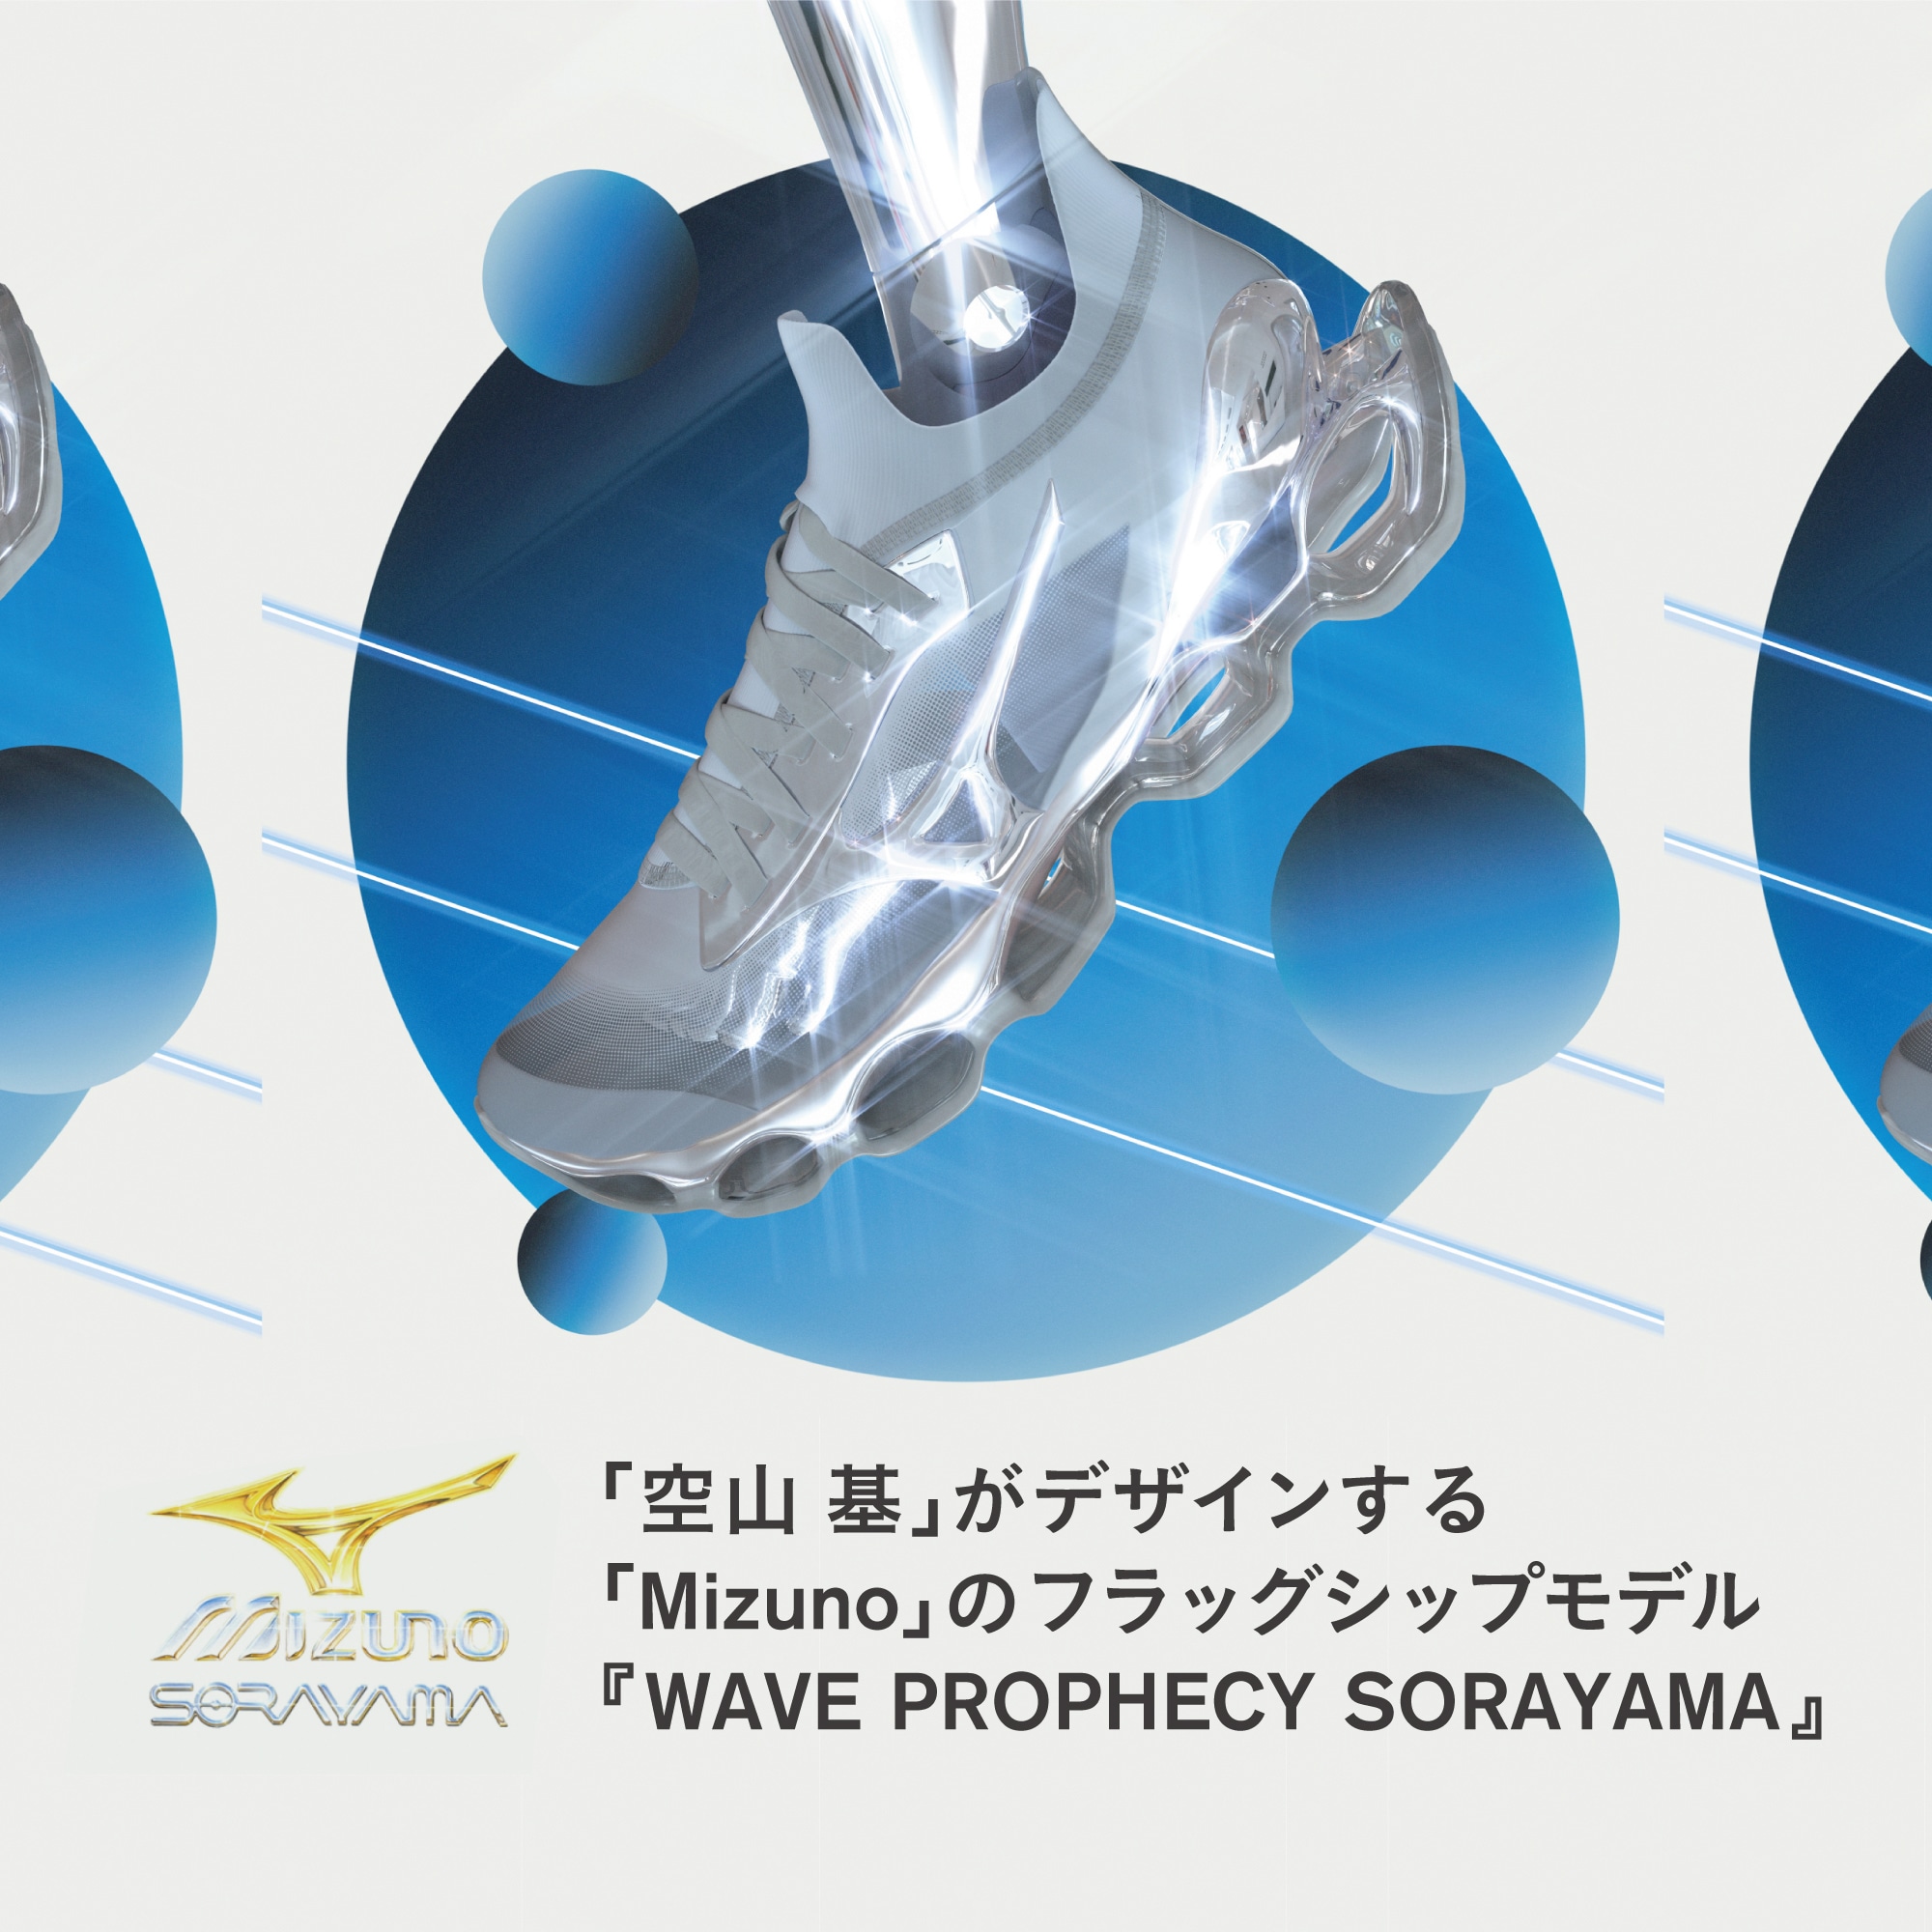 〈Mizuno〉 WAVE PROPHECY SORAYAMA